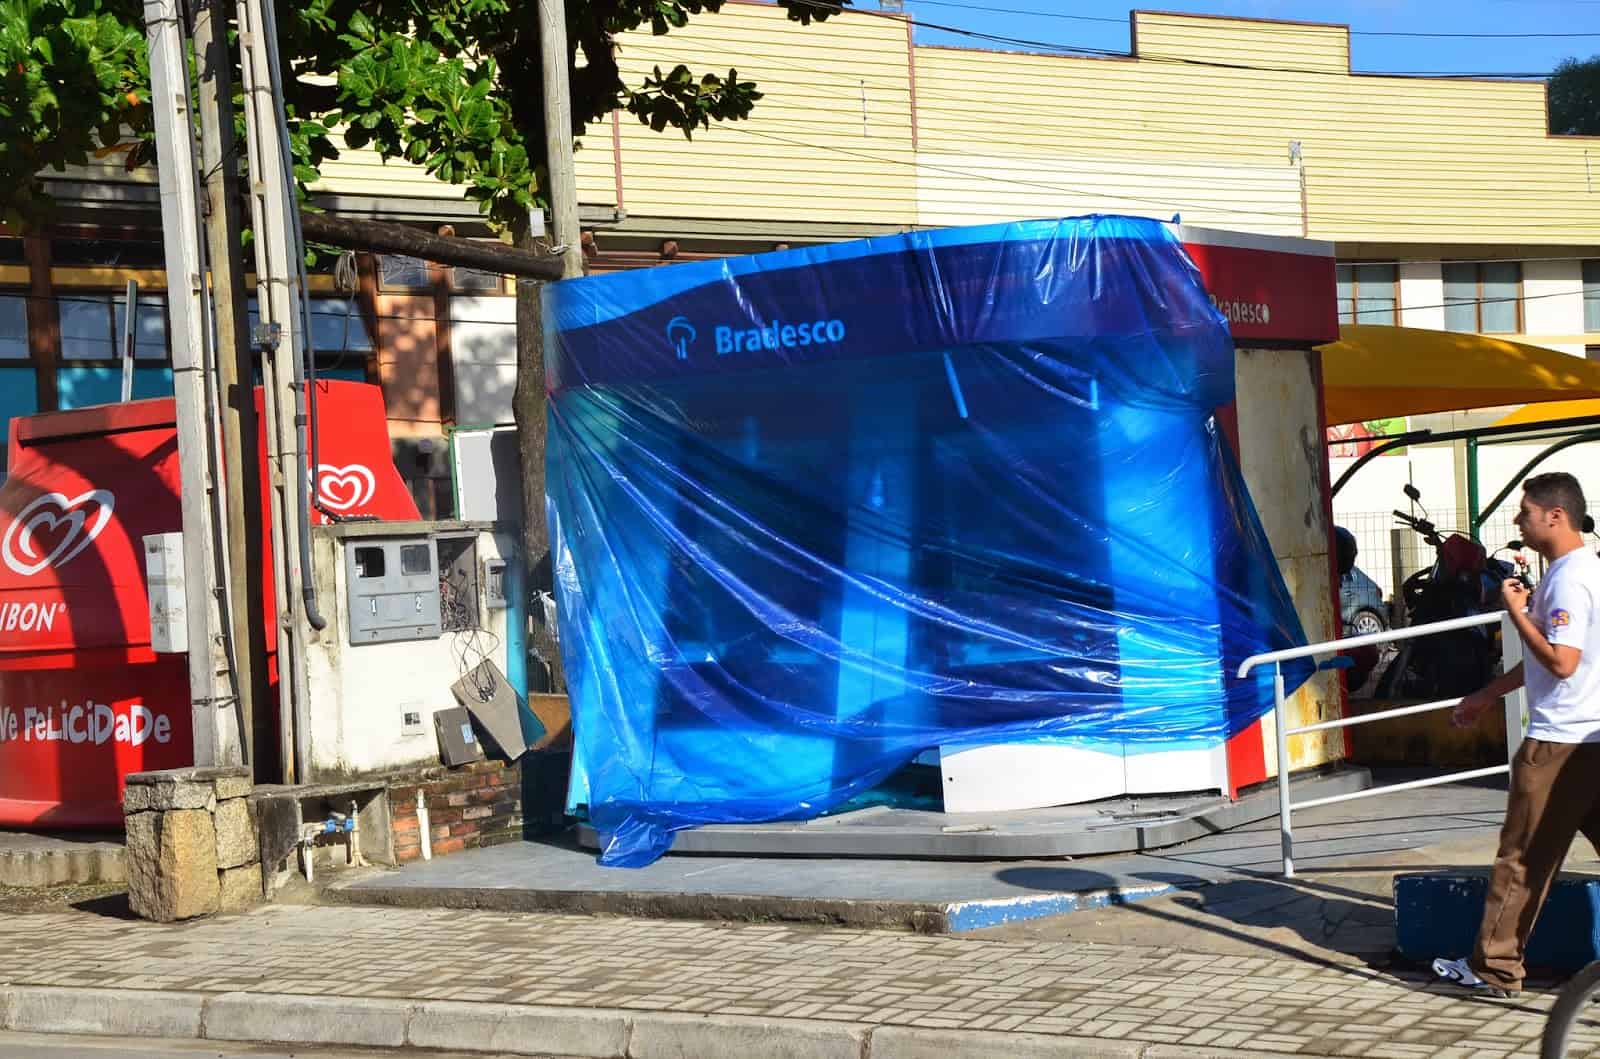 Bombed ATM in Ilhabela, Brazil